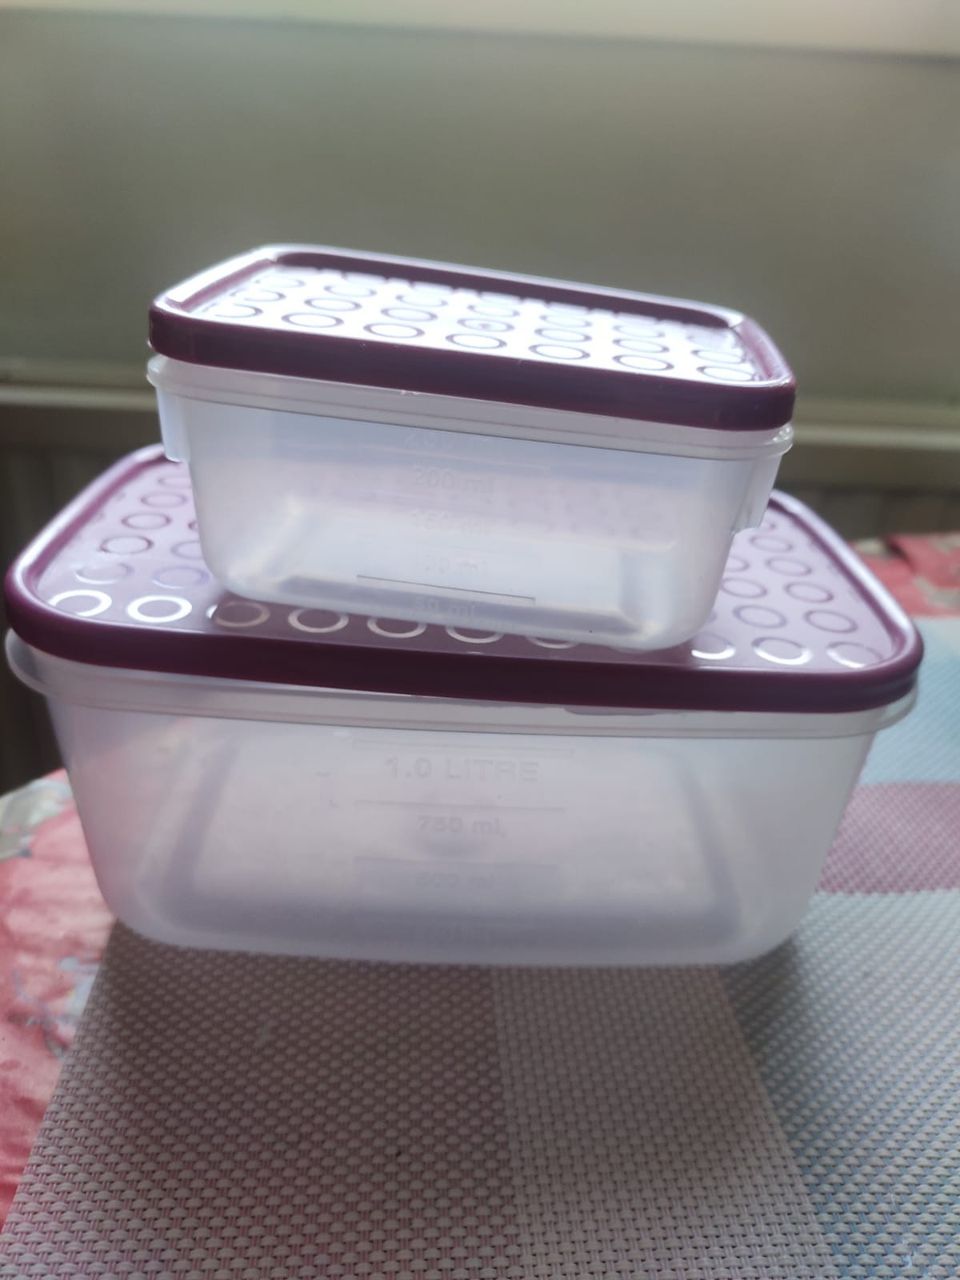 A set of 2 microwaveable box